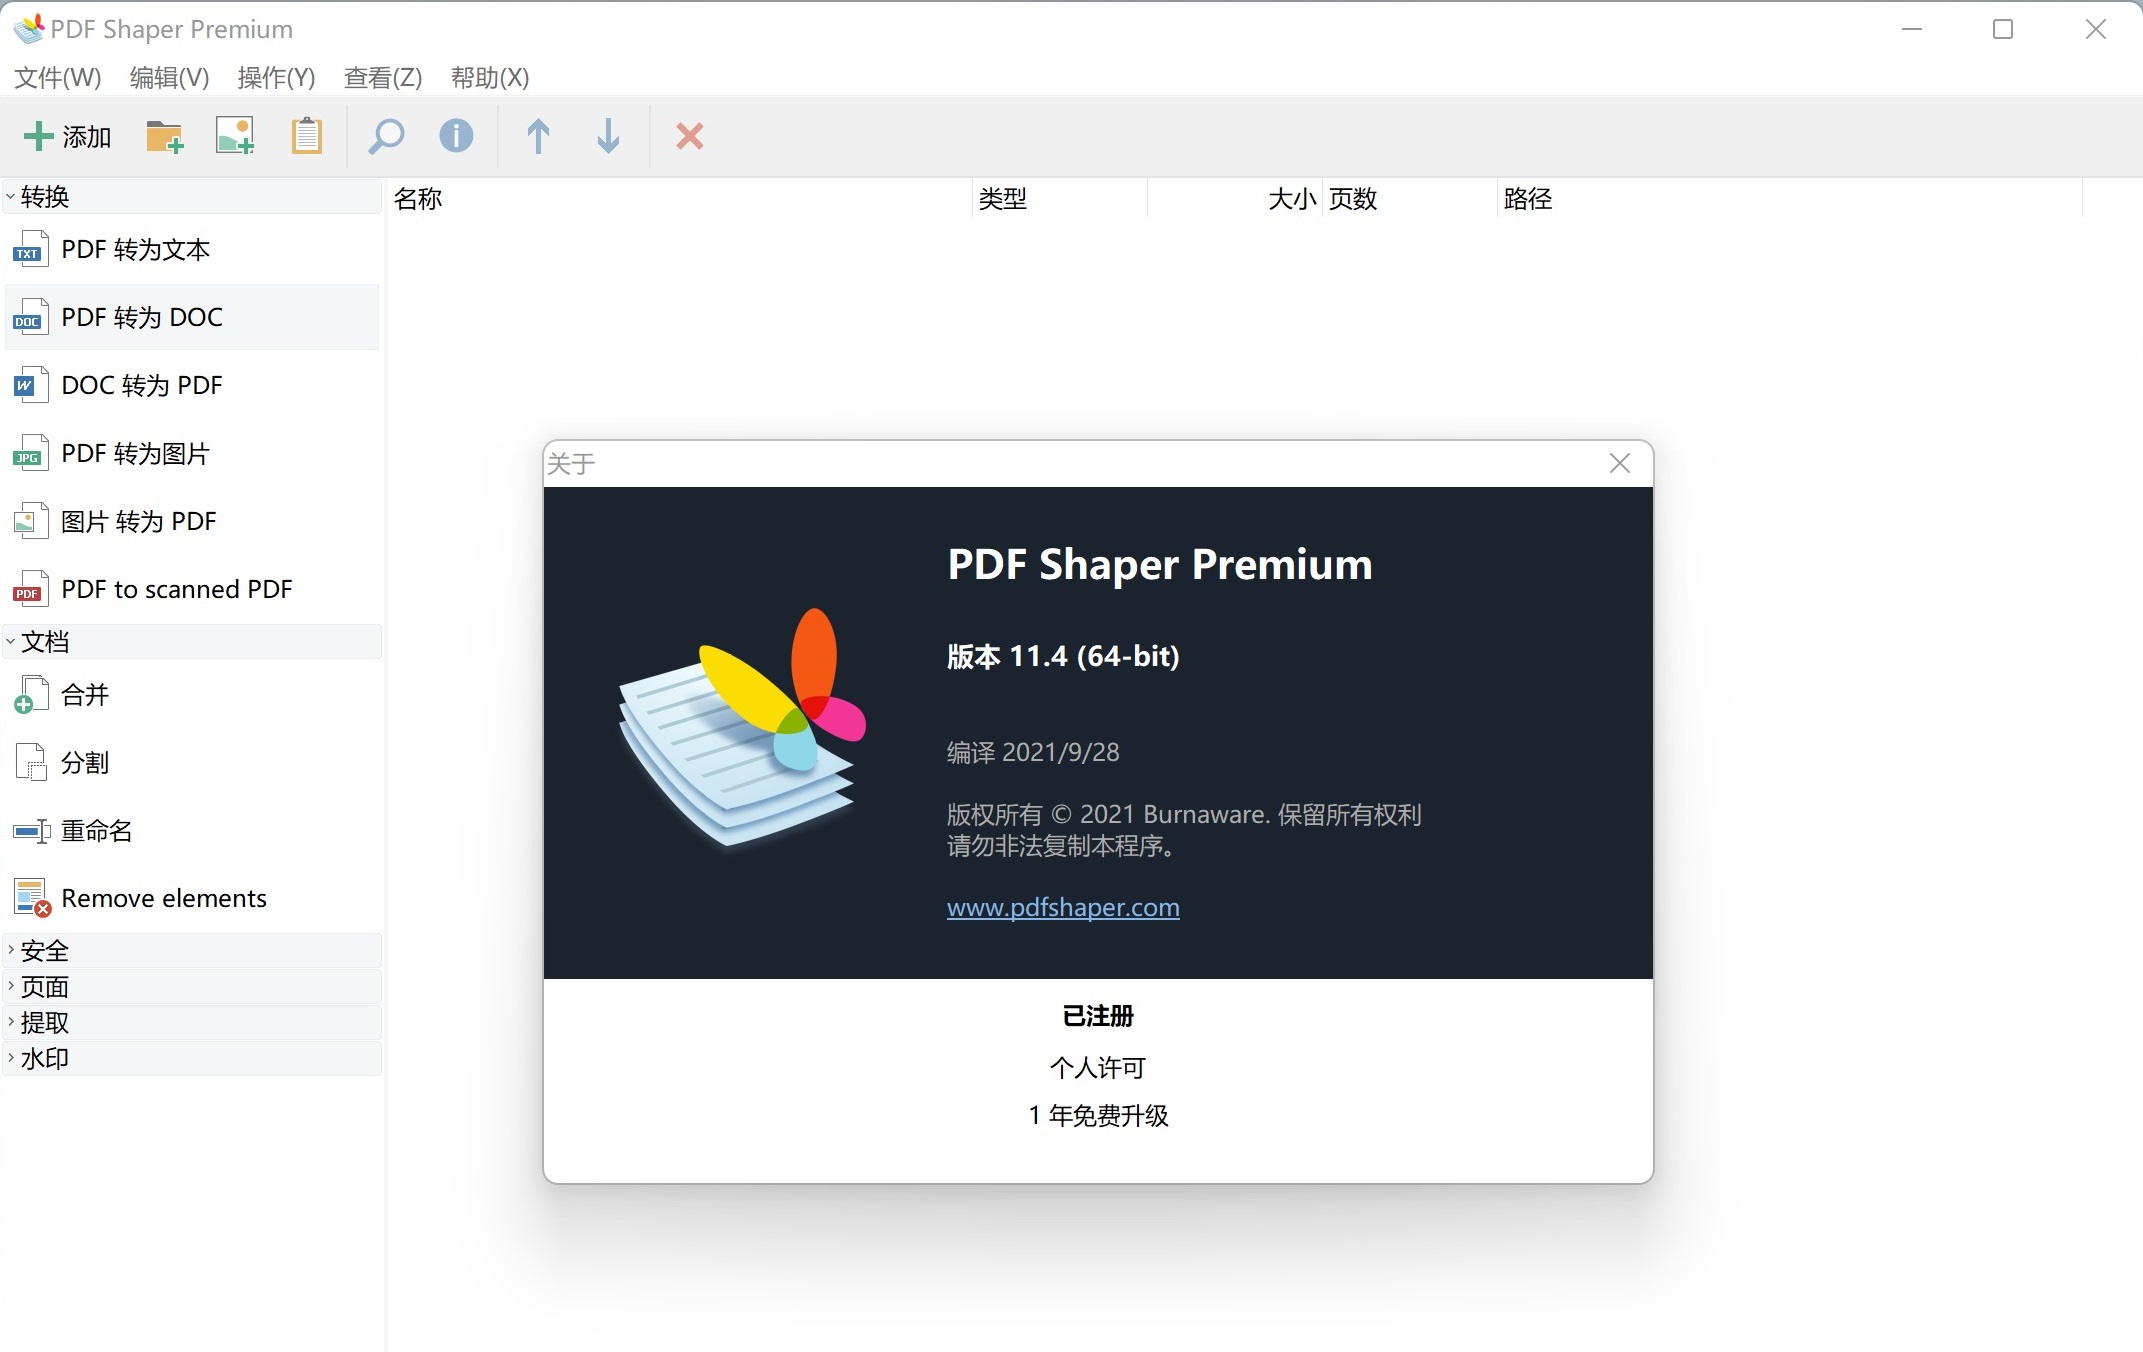 PDF处理软件 PDF Shaper Professional / Premium 11.4